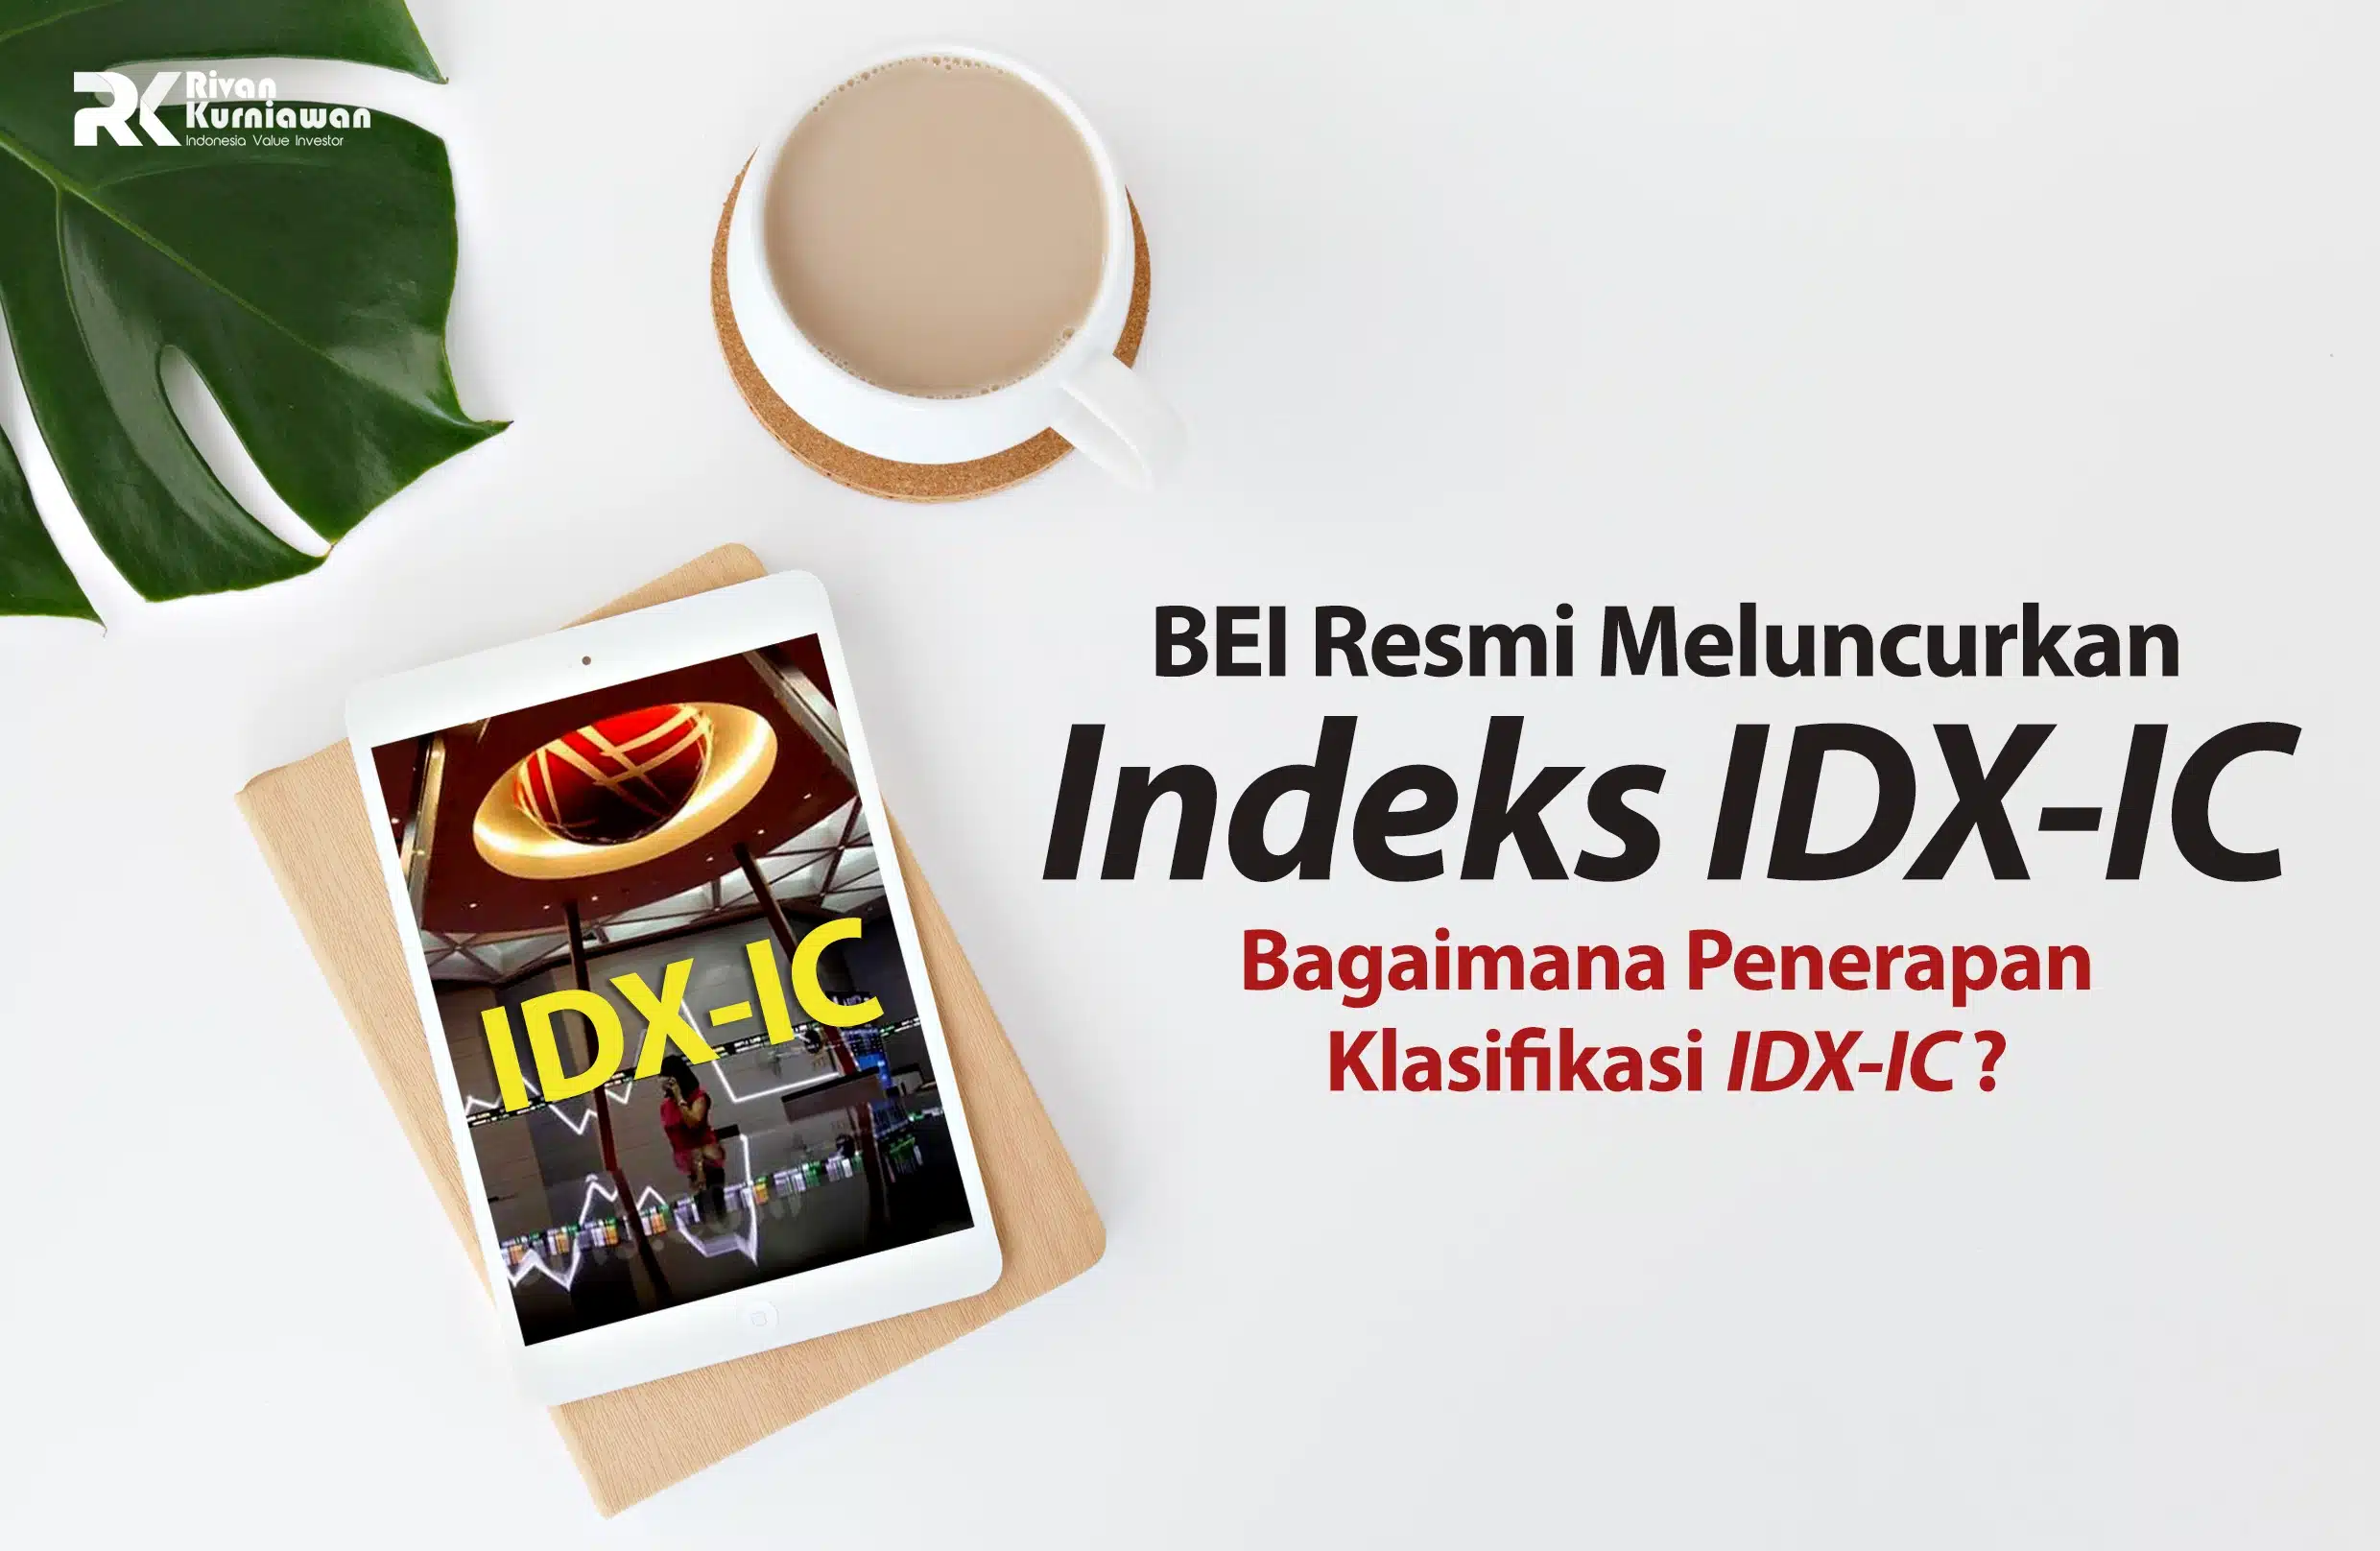 BEI Resmi Meluncurkan Indeks IDX-IC